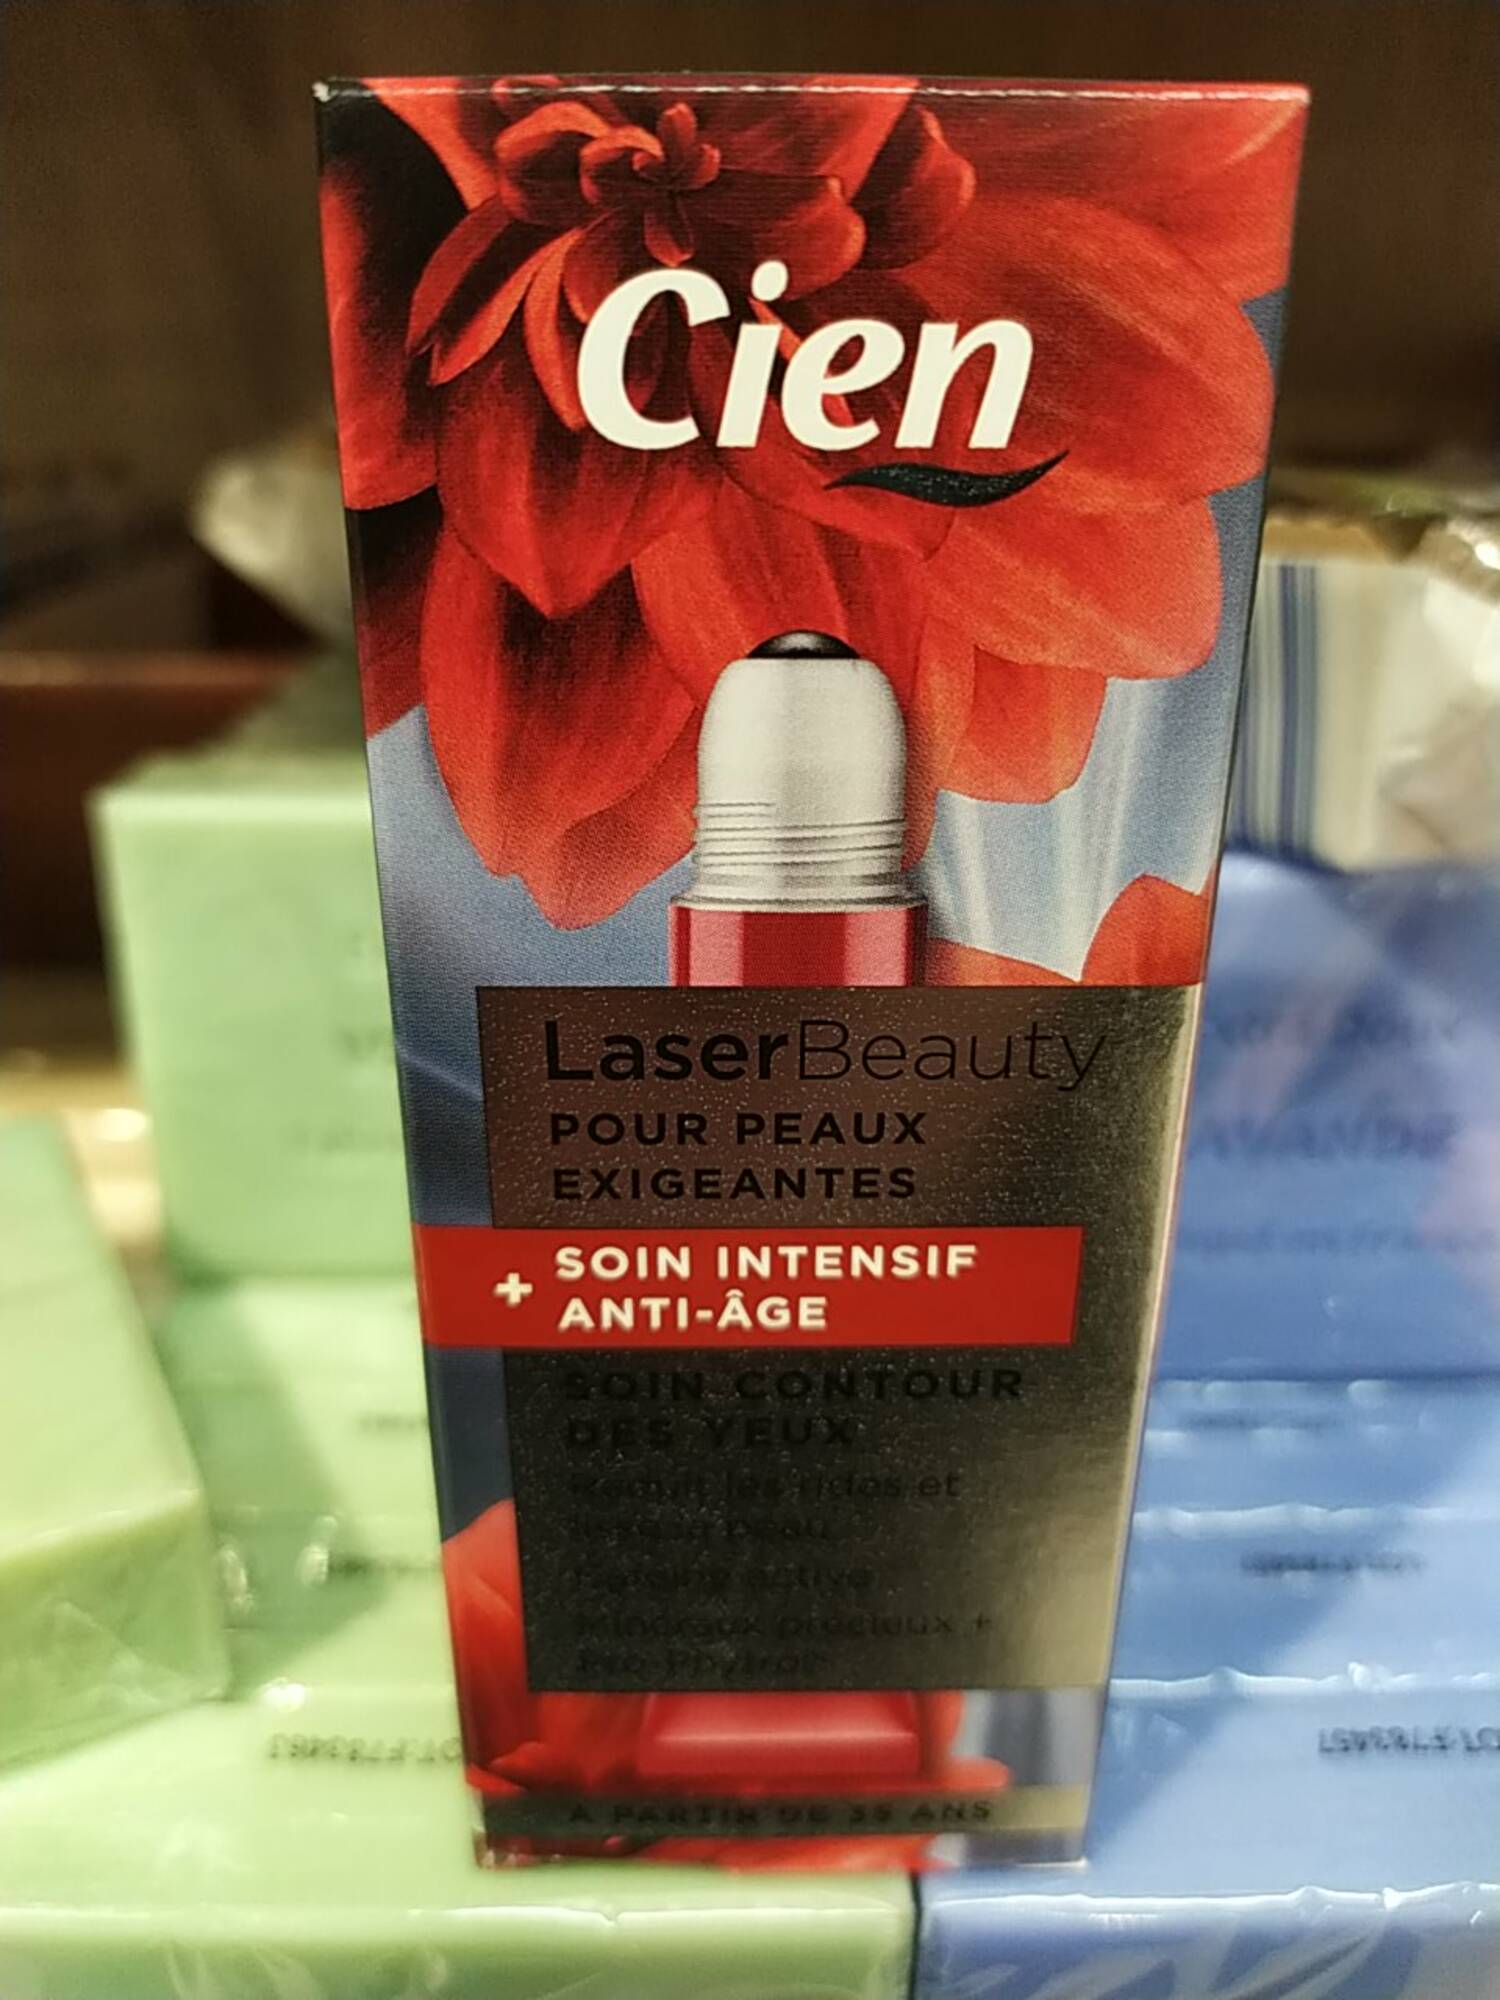 LIDL - Cien - Laser beauty soin intensif anti-âge